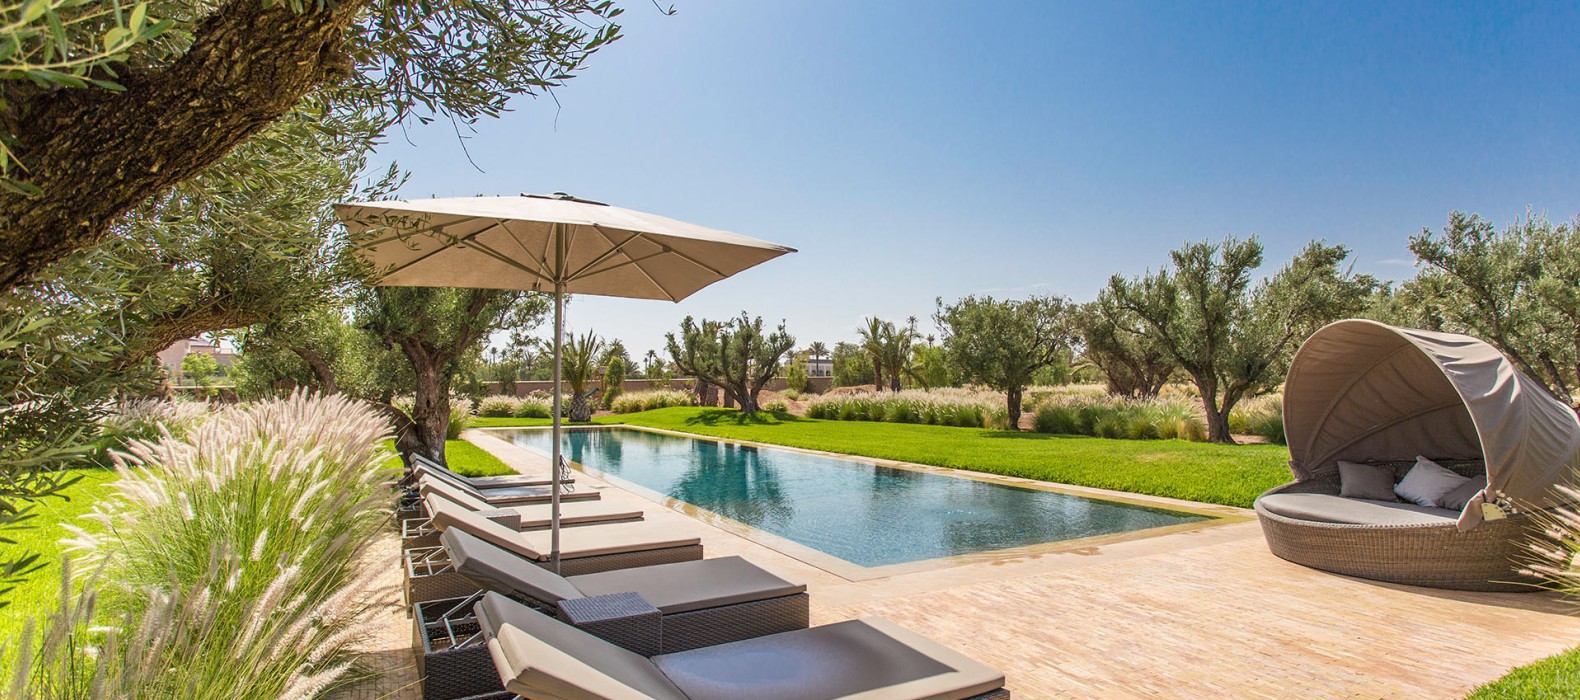 Exterior pool view of Villa Oasis in Marrakech